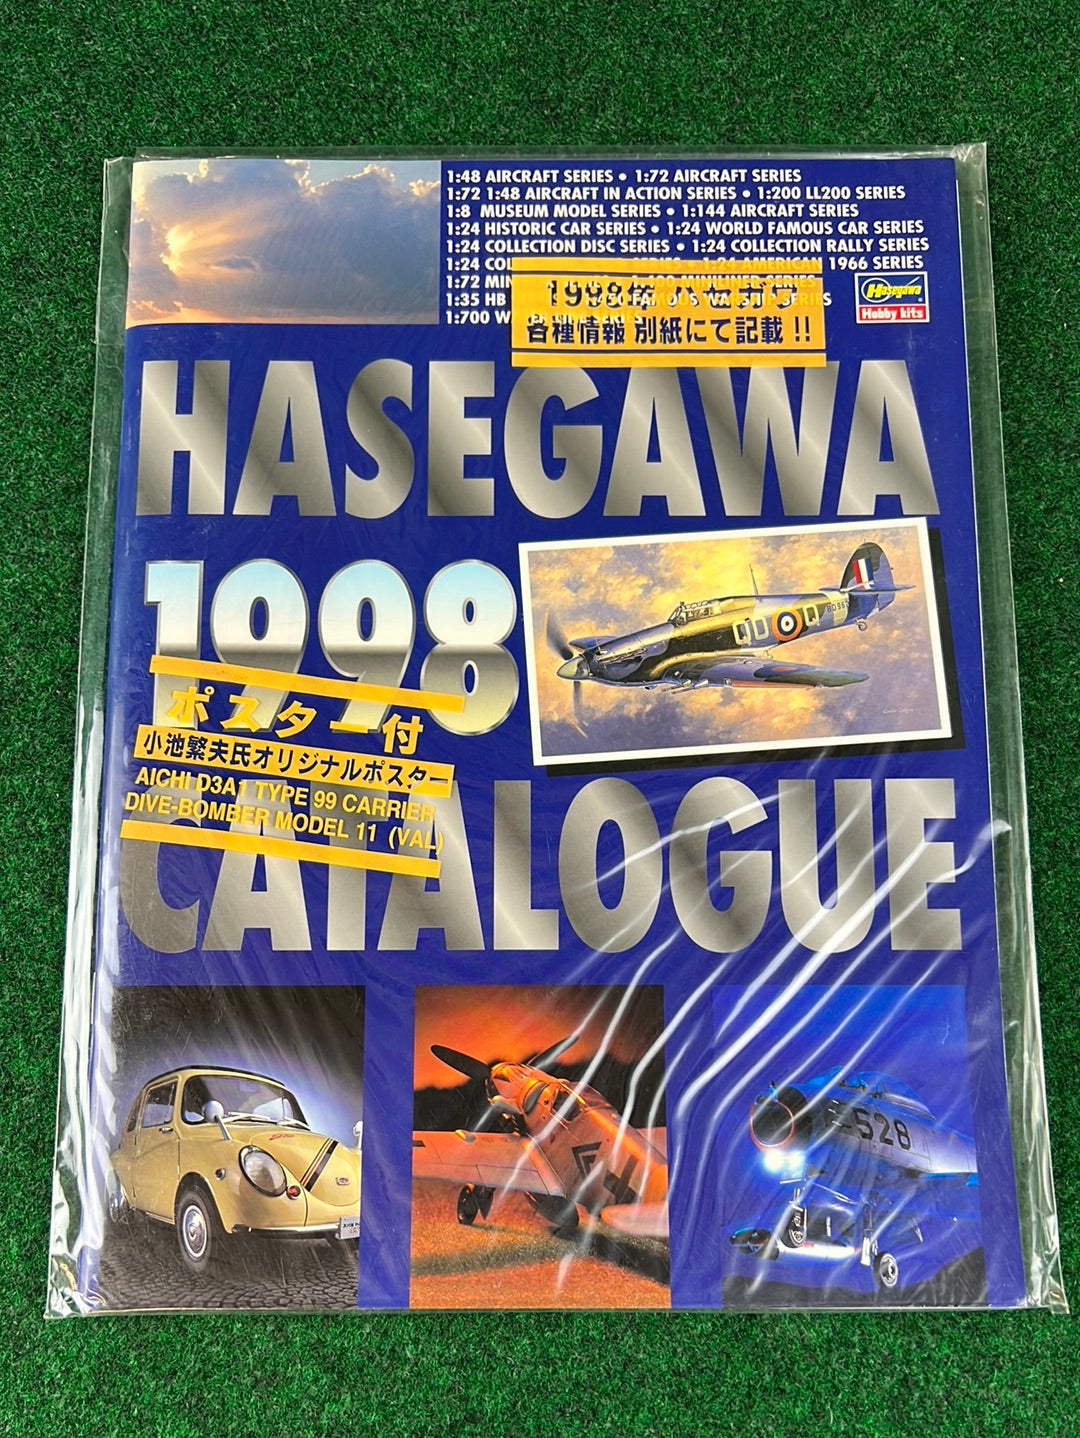 Hasegawa Model Corp. Catalog - 1998